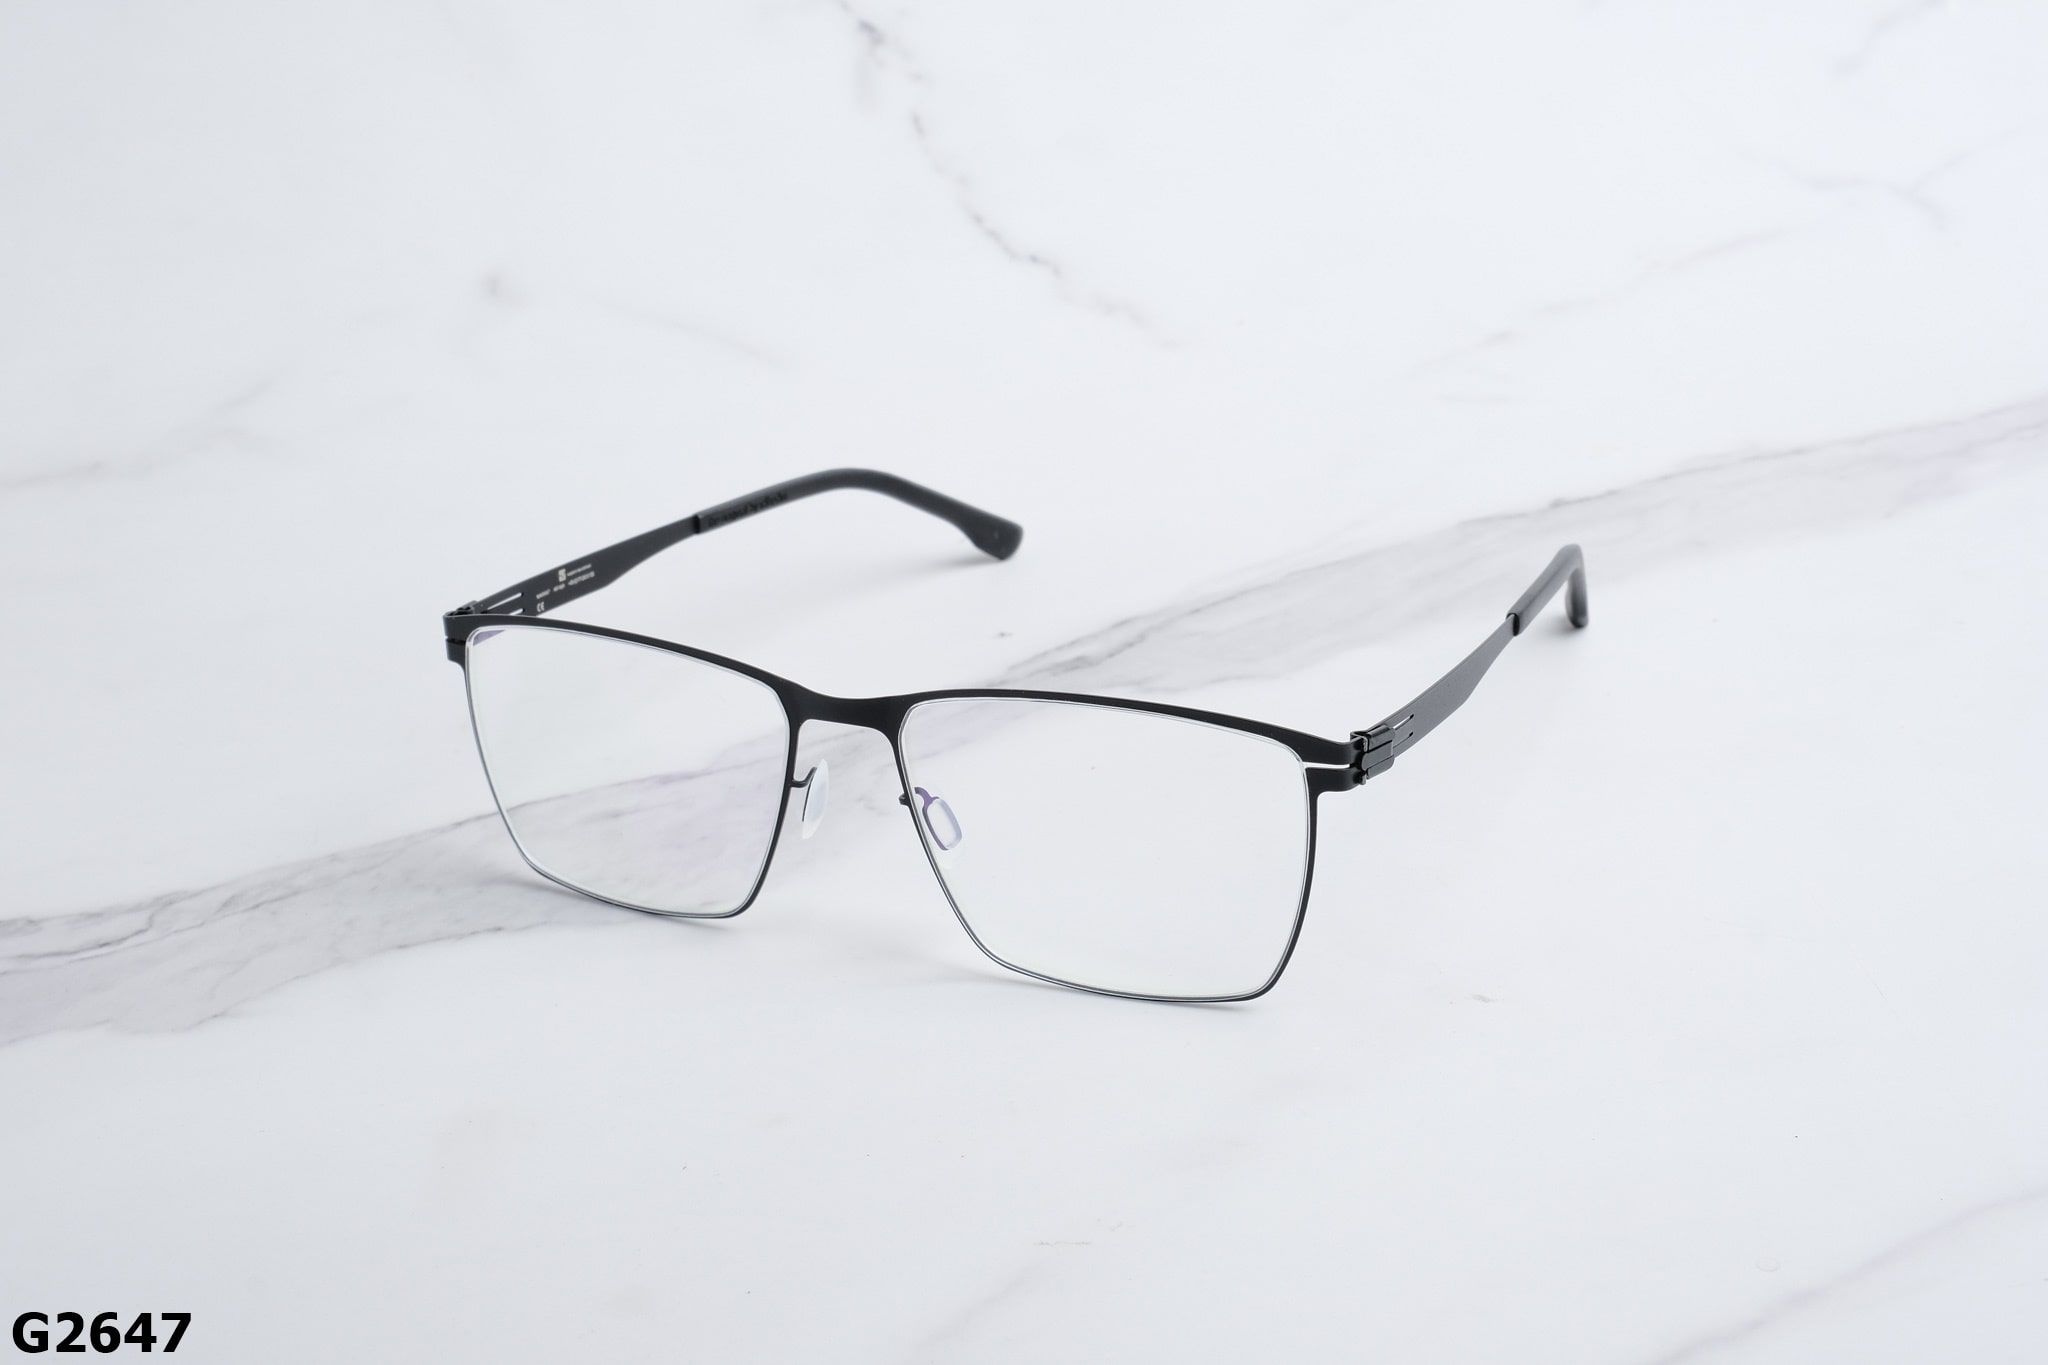  IC Eyewear - Glasses - G2647 